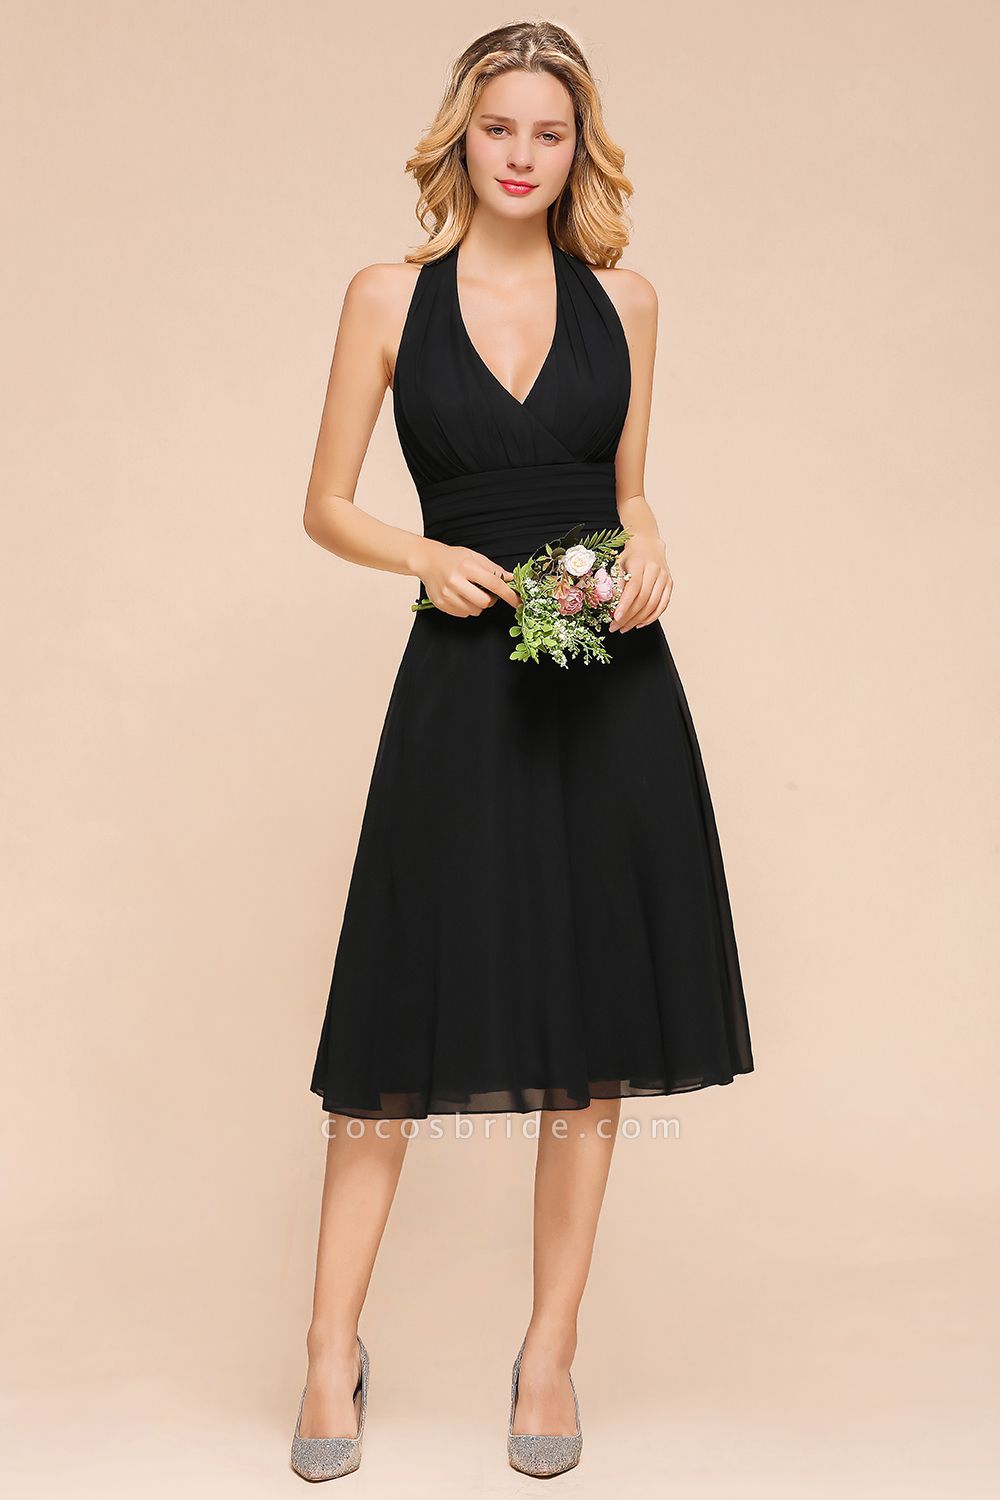 Simple Black Deep V-neck Halter Backless Knee-length Chiffon A-Line Bridesmaid Dress